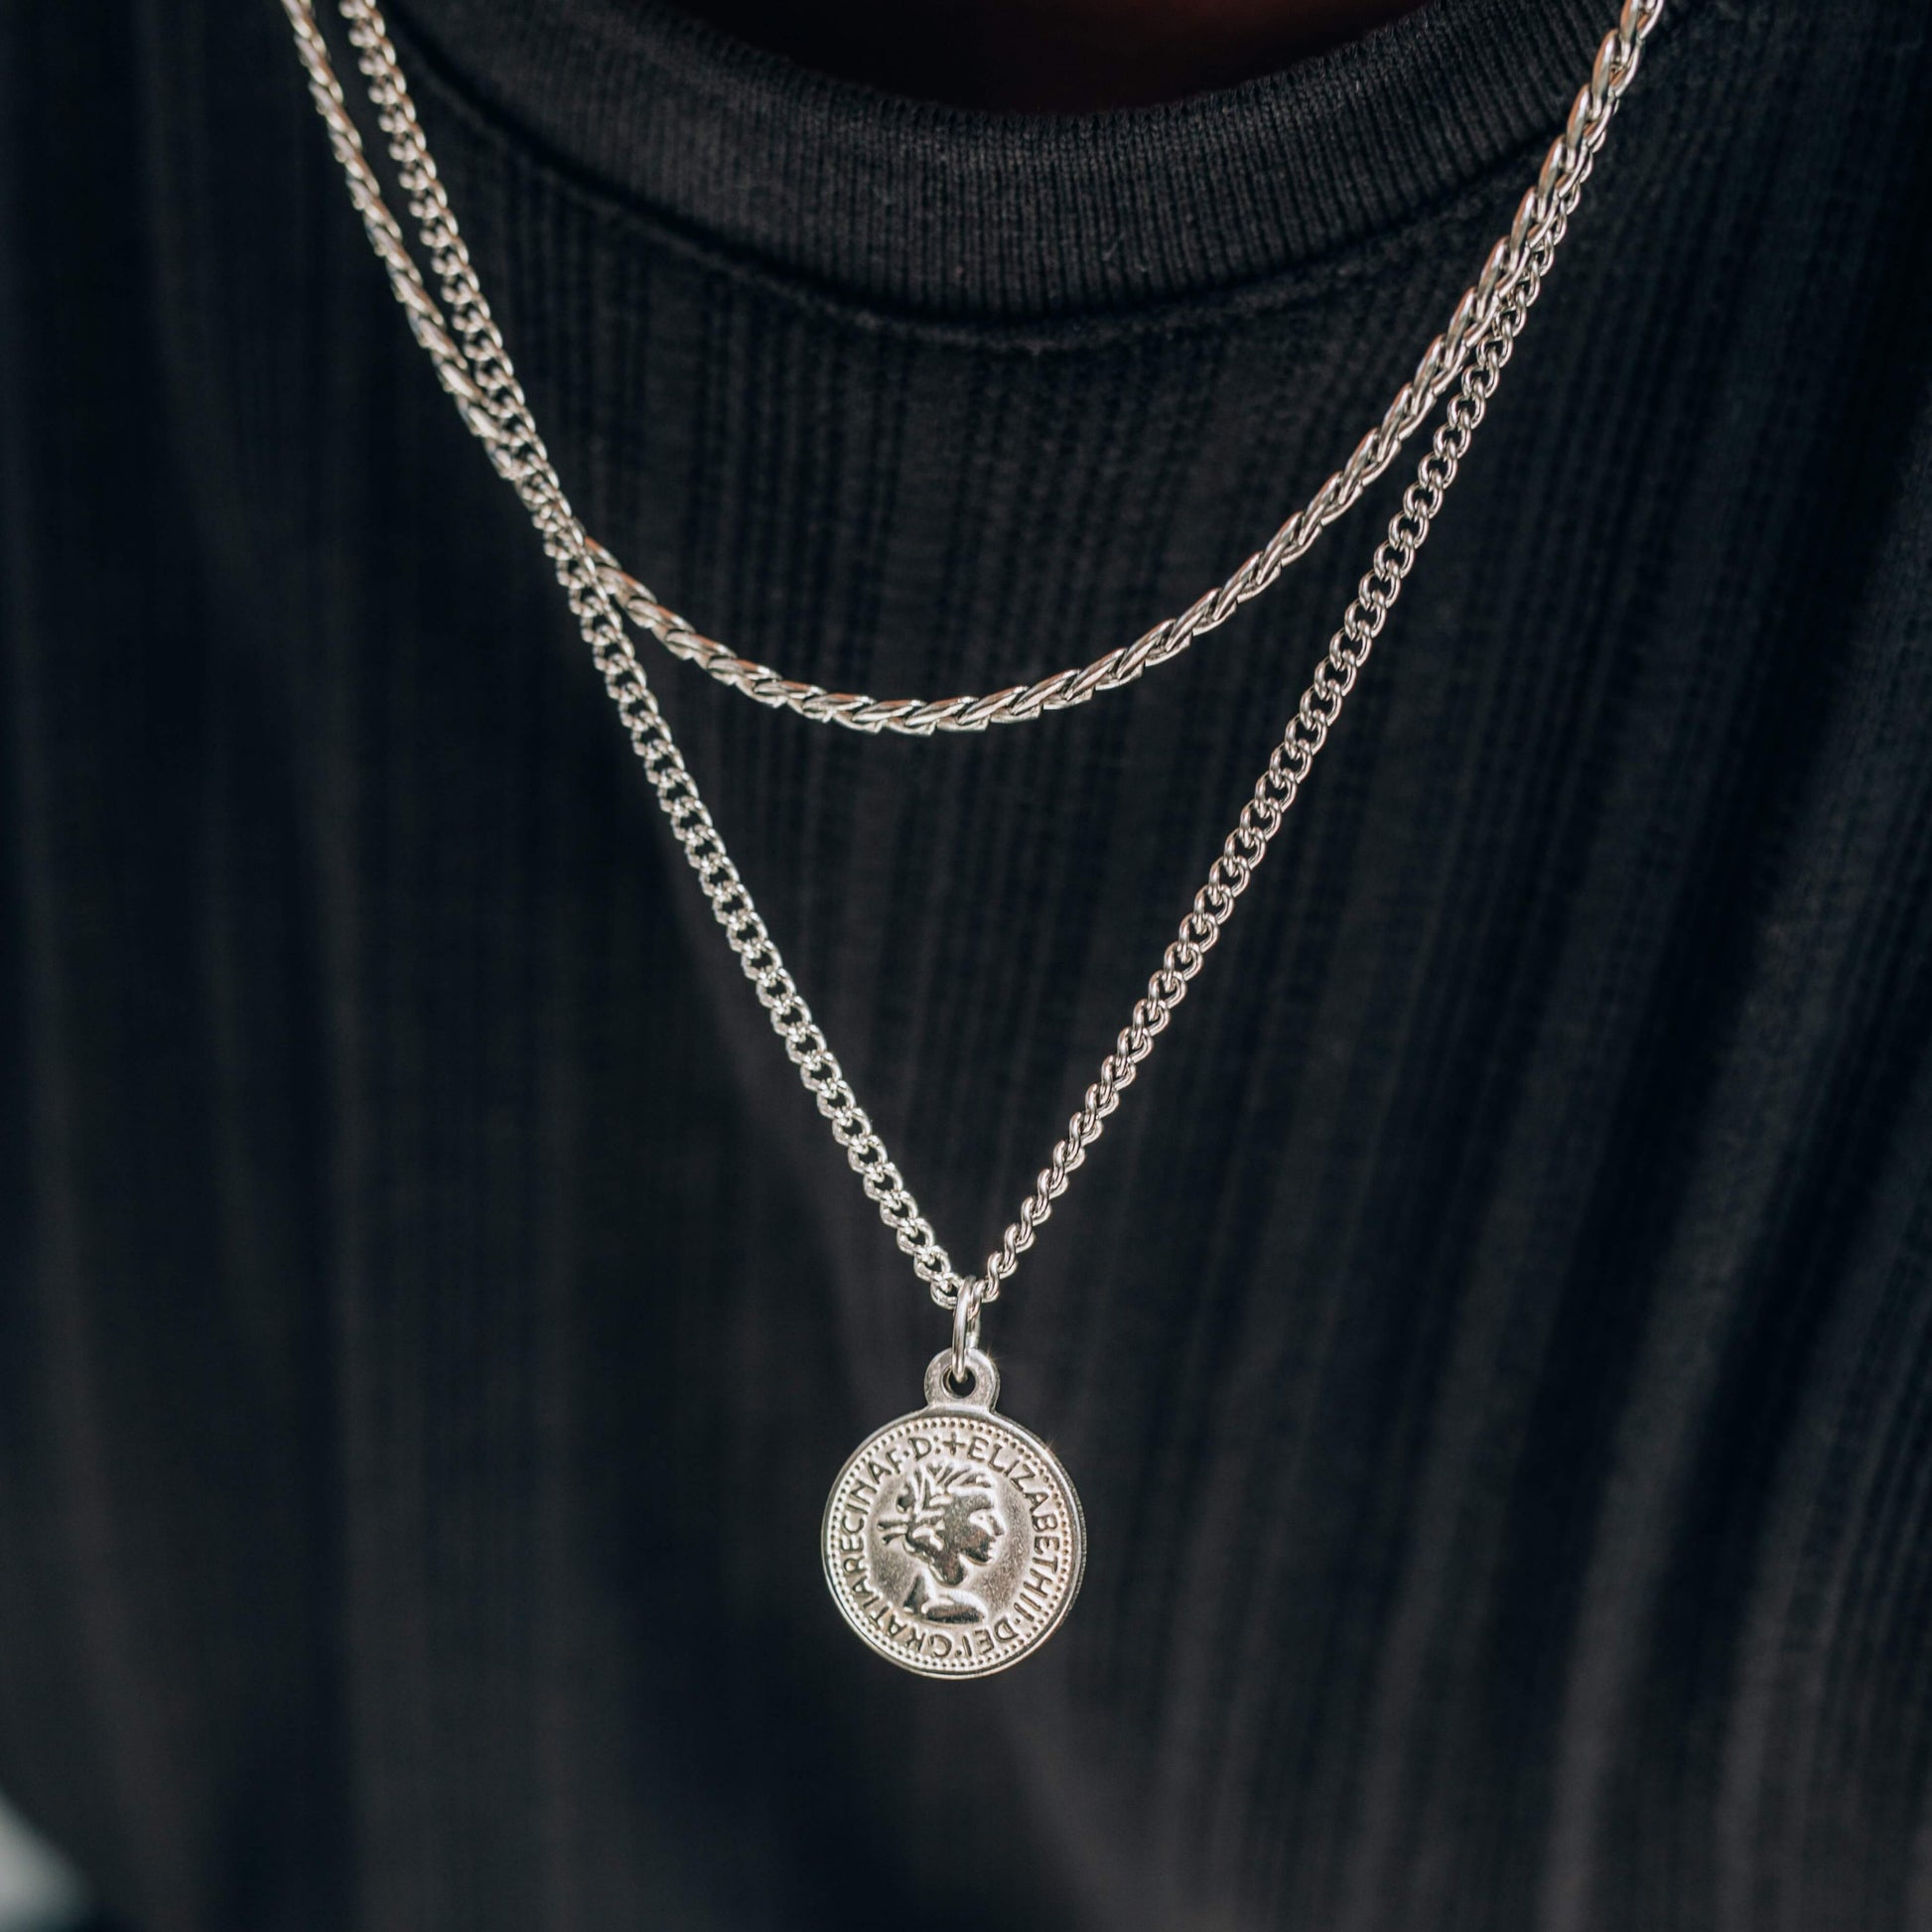 Silver Coin Pendant Necklace For Men or Women - Boutique Wear RENN